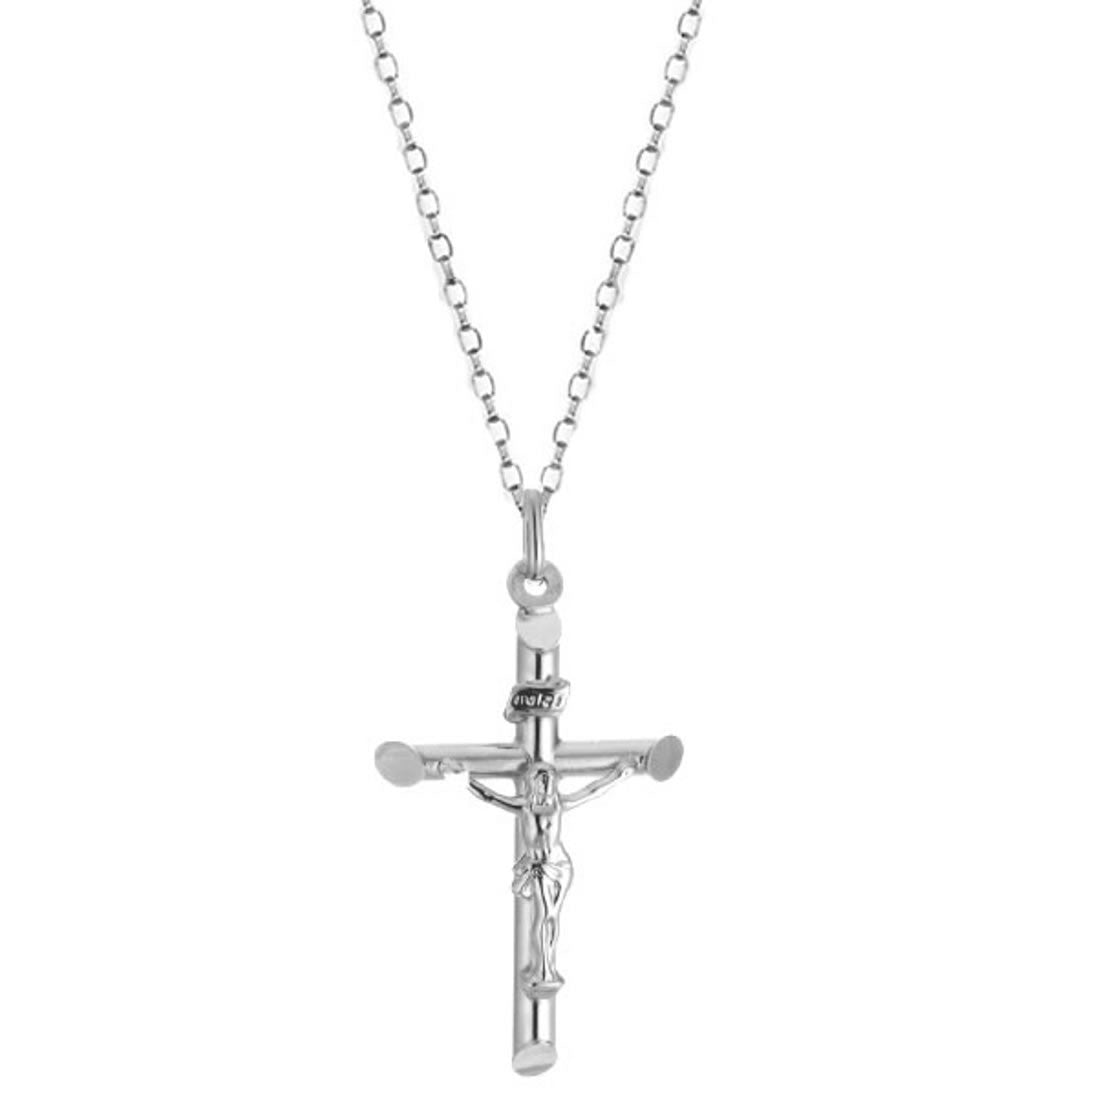 10K White Gold Cross Pendant - Polished Plain Crucifix Necklace Charm Men  Women | eBay